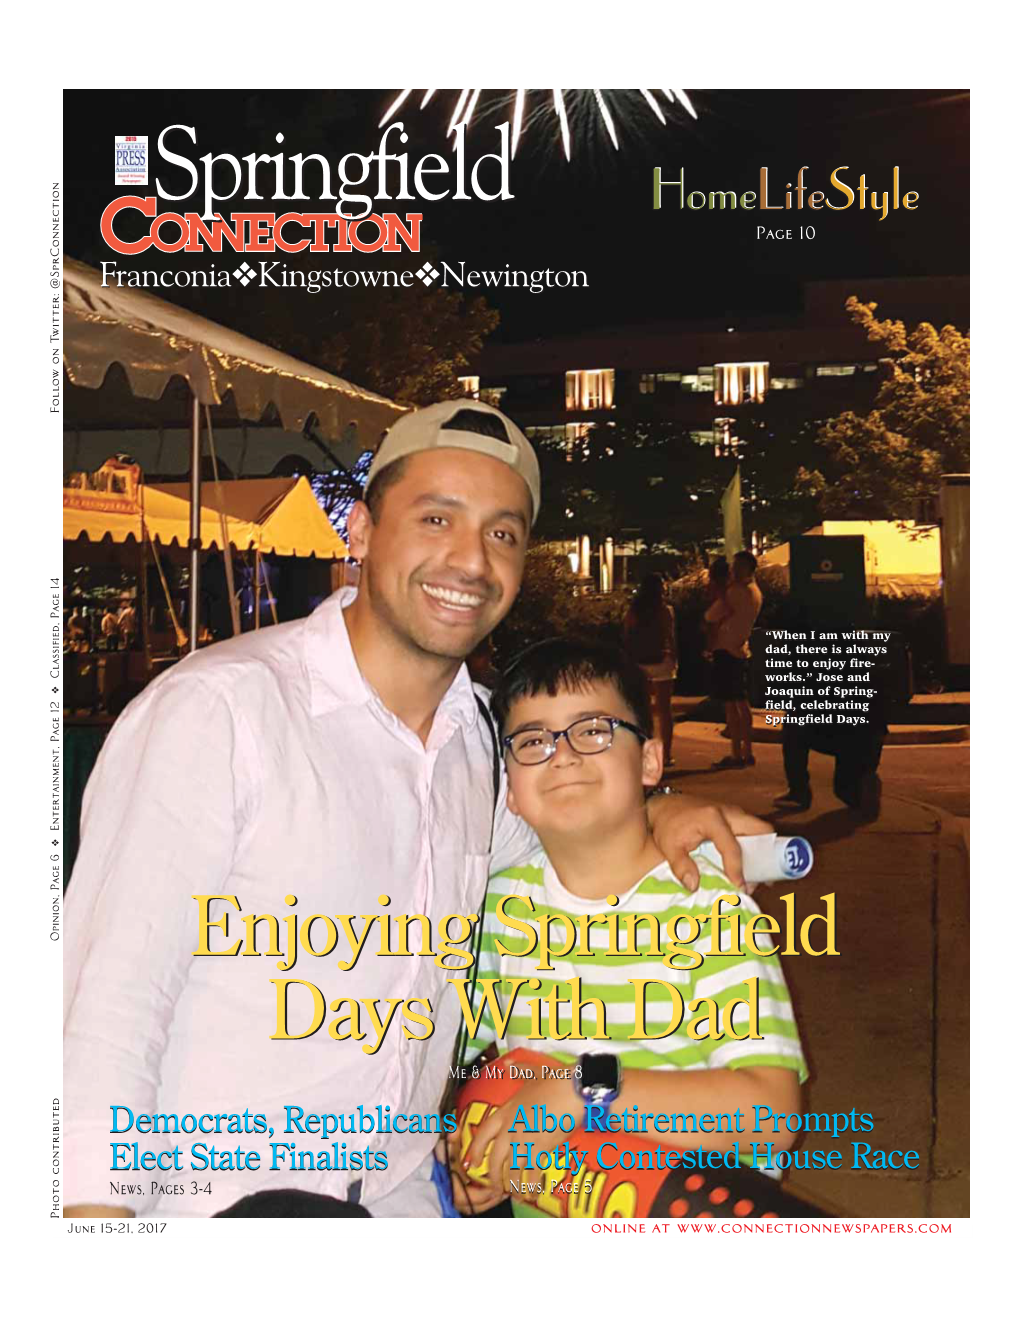 Springfieldspringfield Homelifestylehomehomelifestylelifestyle Page 10 Franconia❖Kingstowne❖Newington